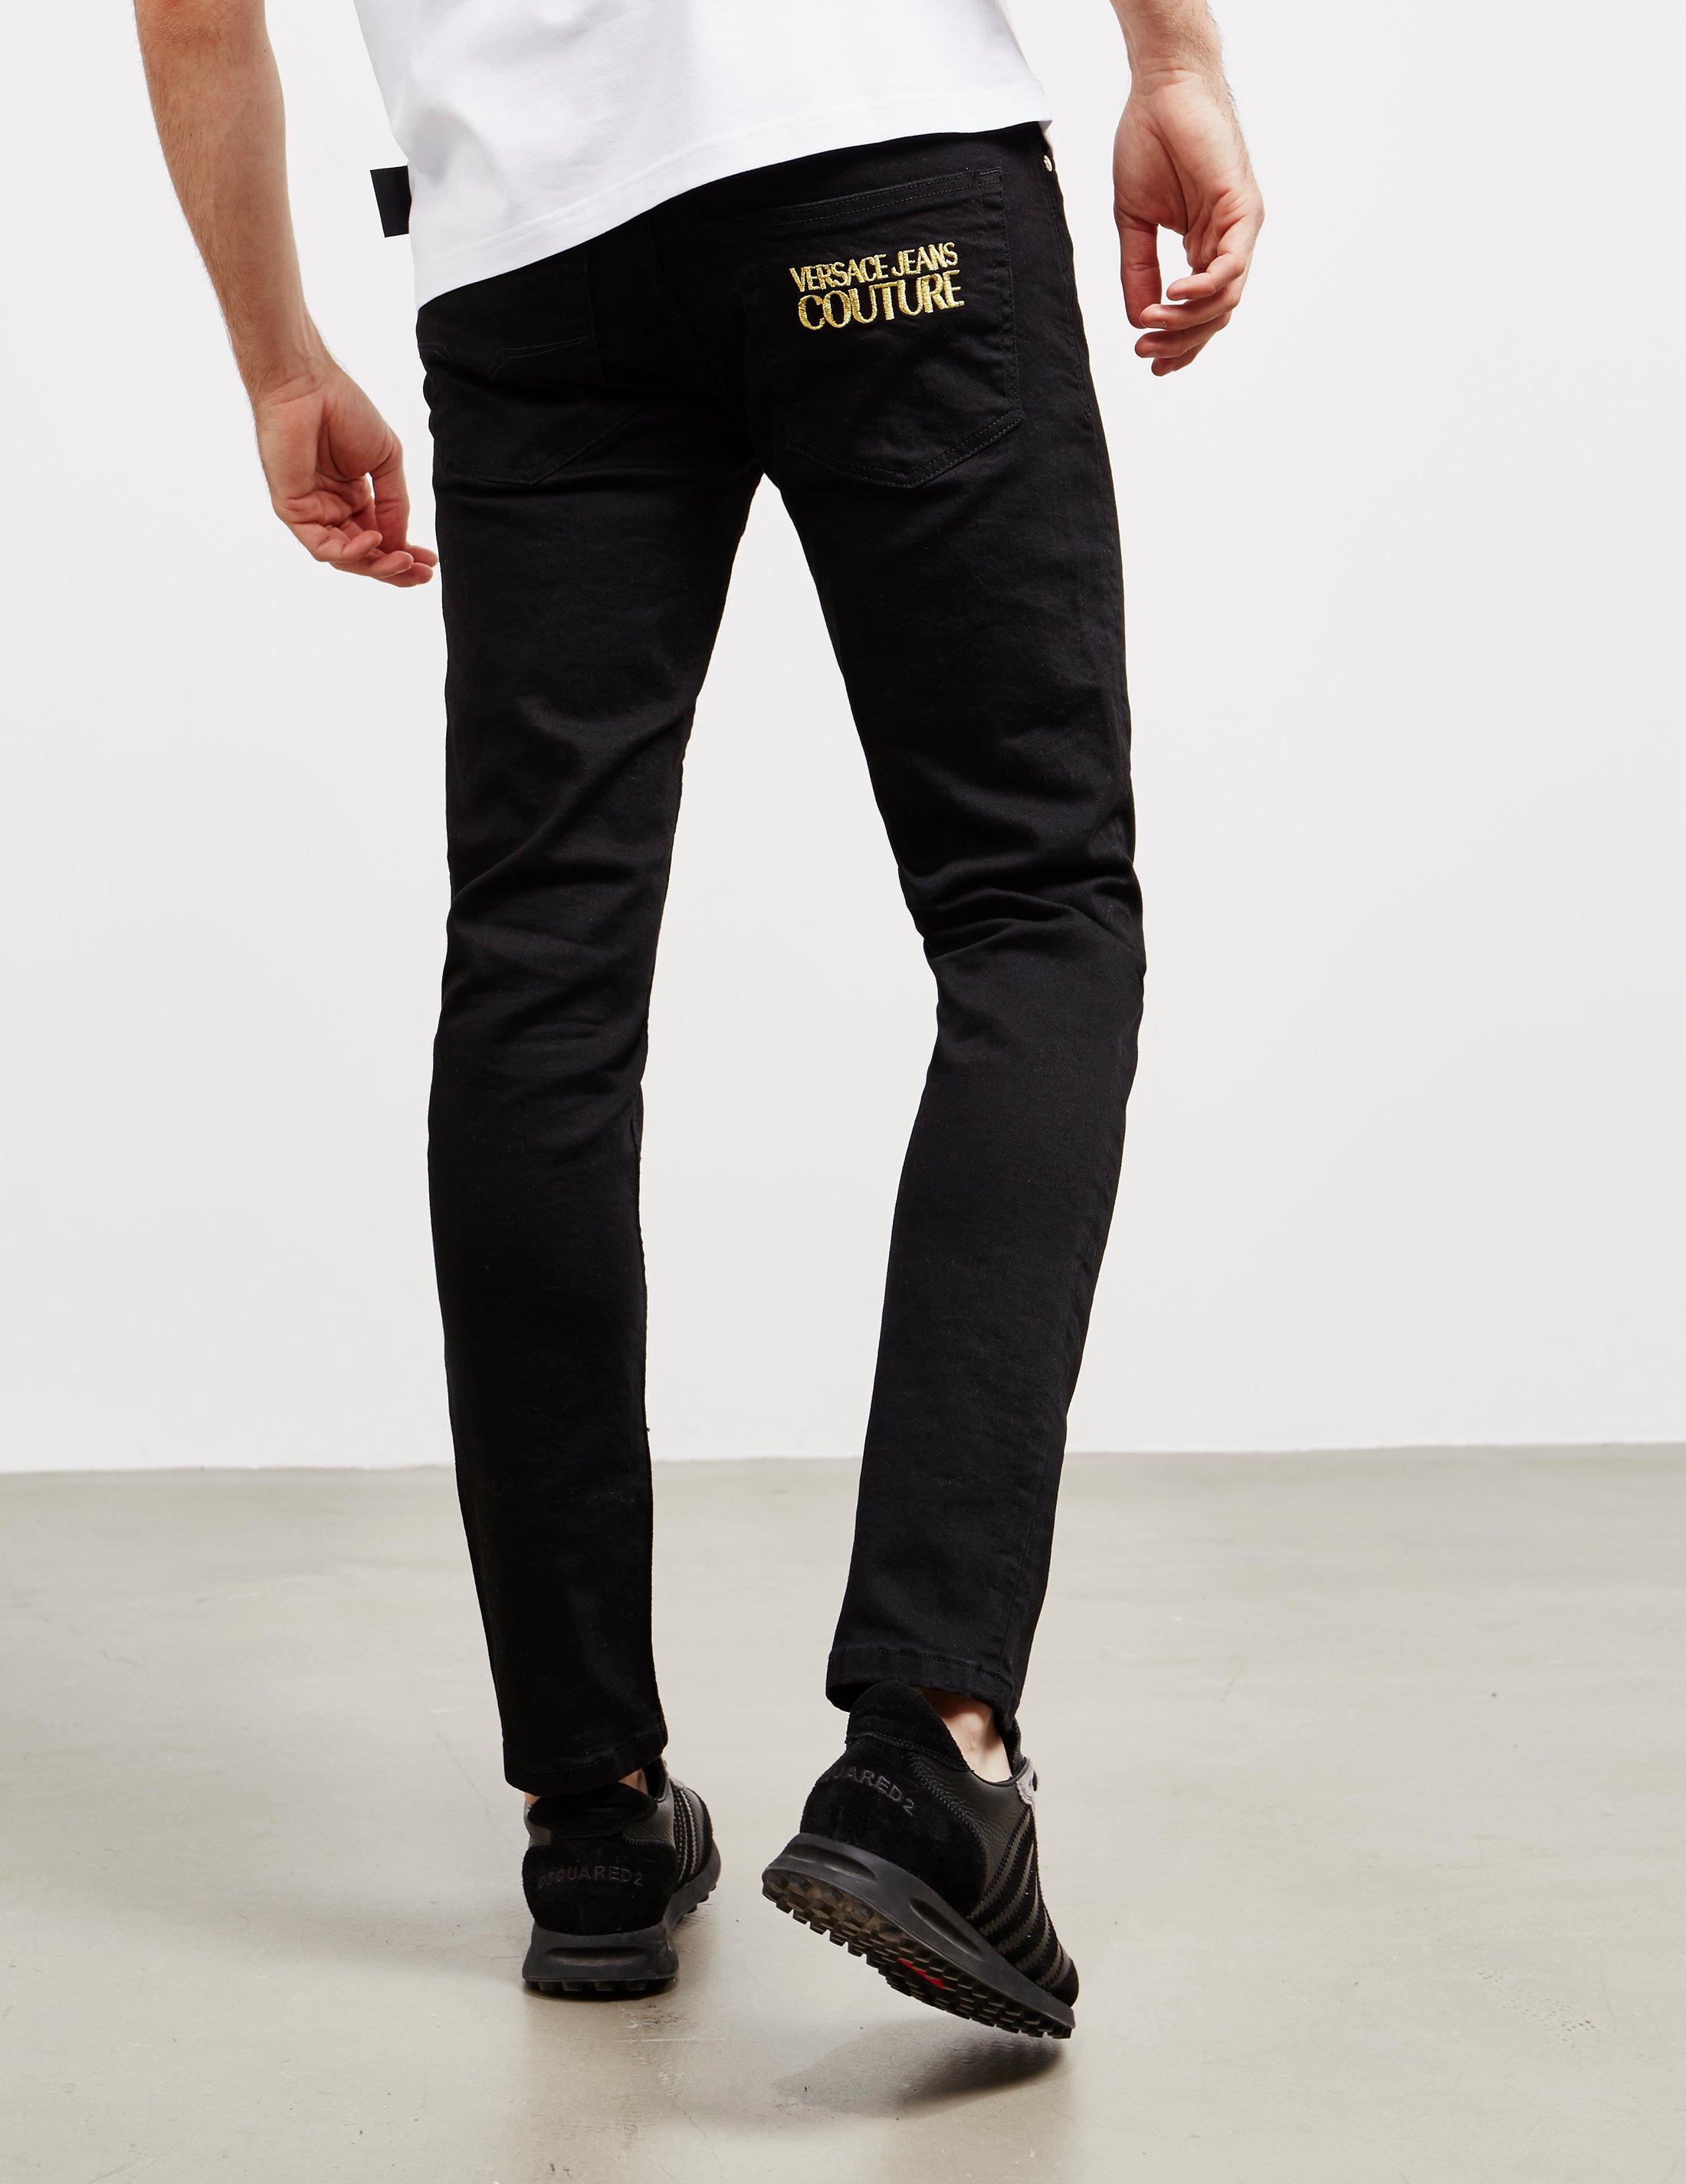 Versace Jeans Denim Skinny Fit Jeans Black for Men - Lyst